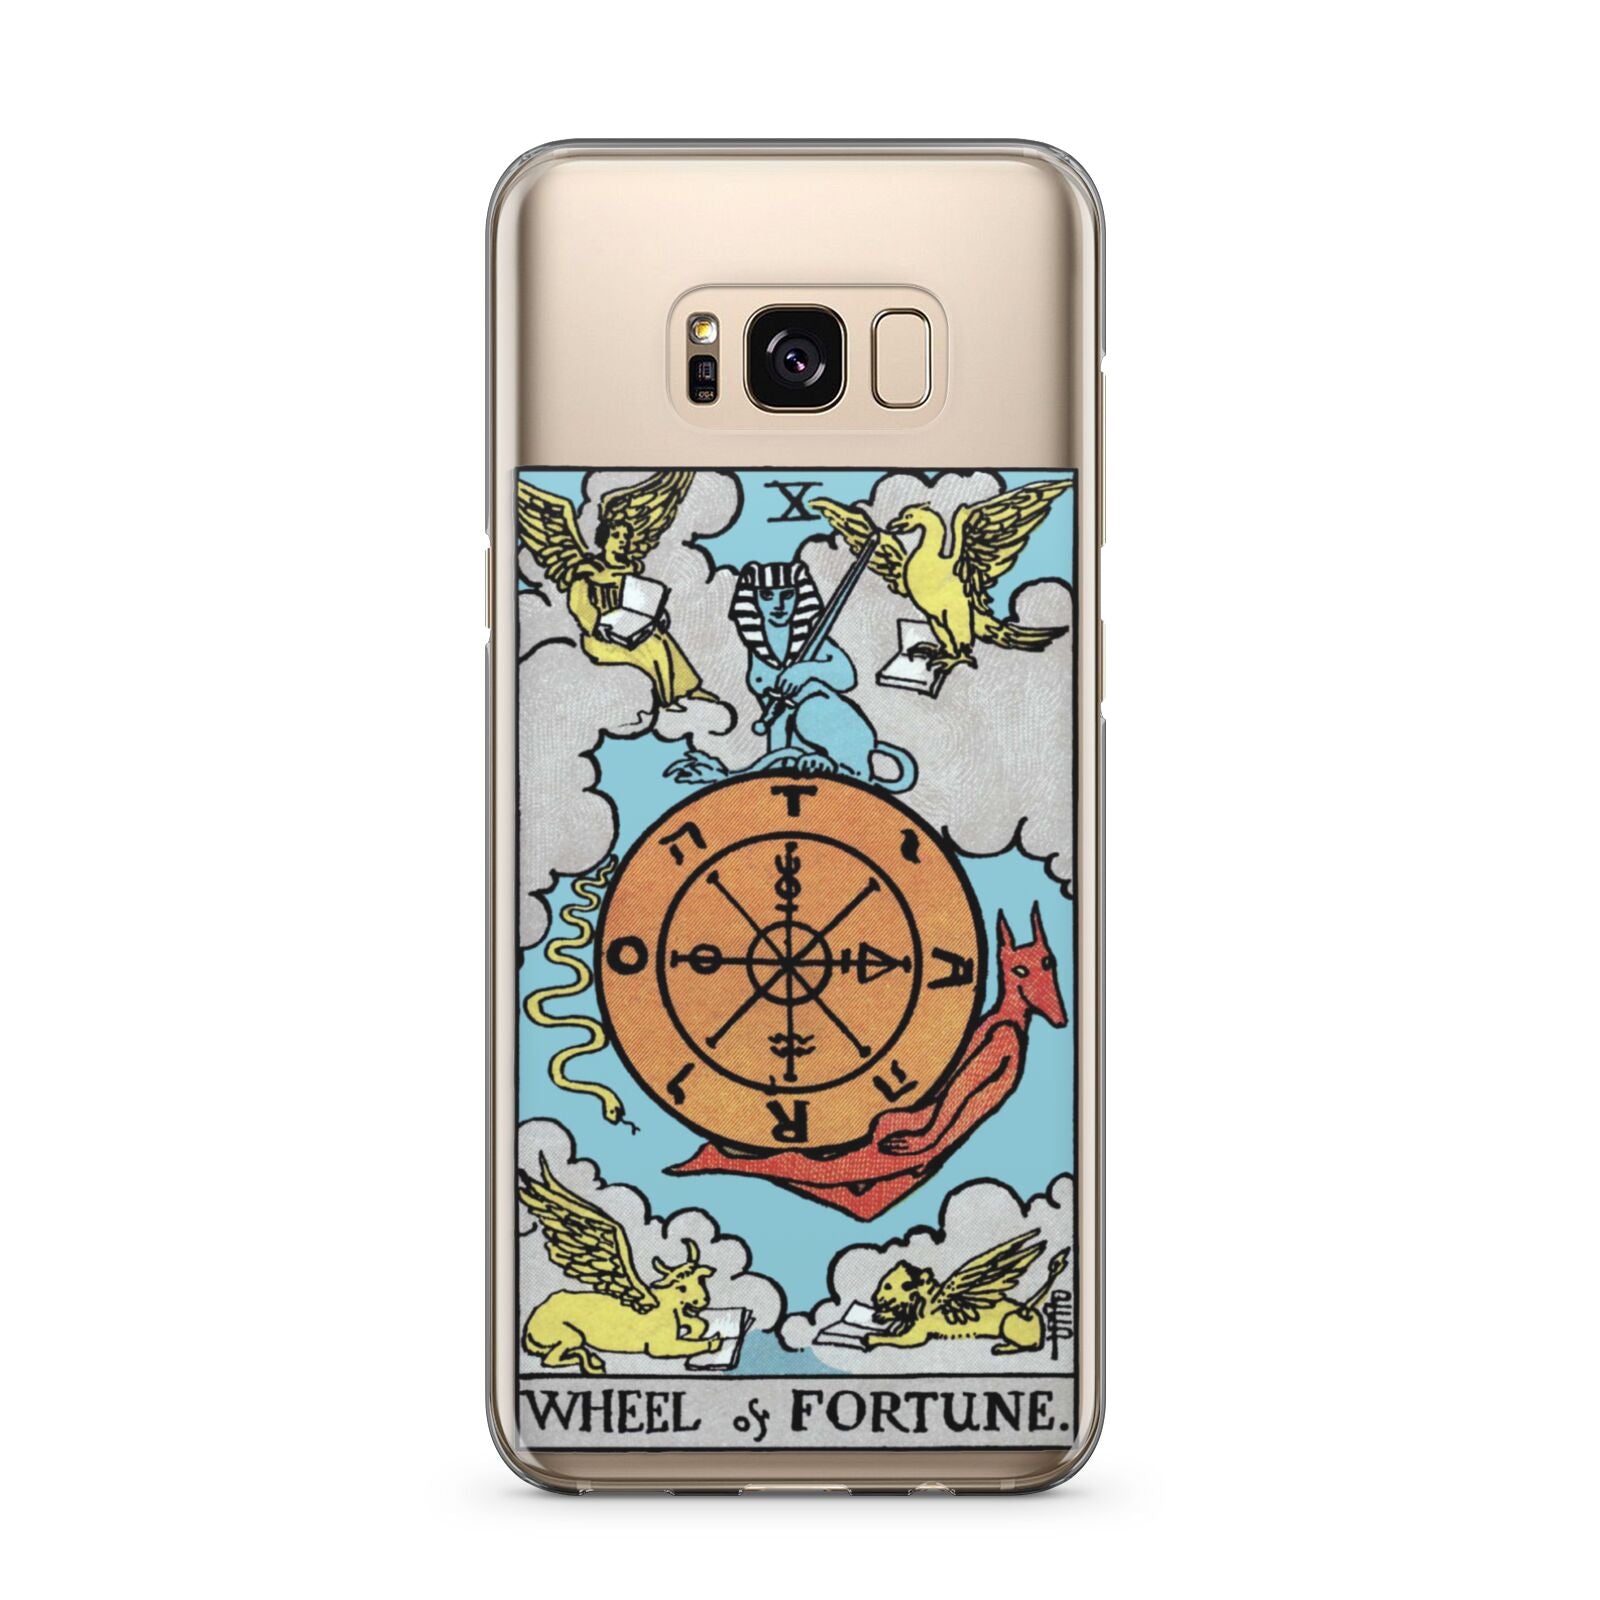 Wheel of Fortune Tarot Card Samsung Galaxy S8 Plus Case